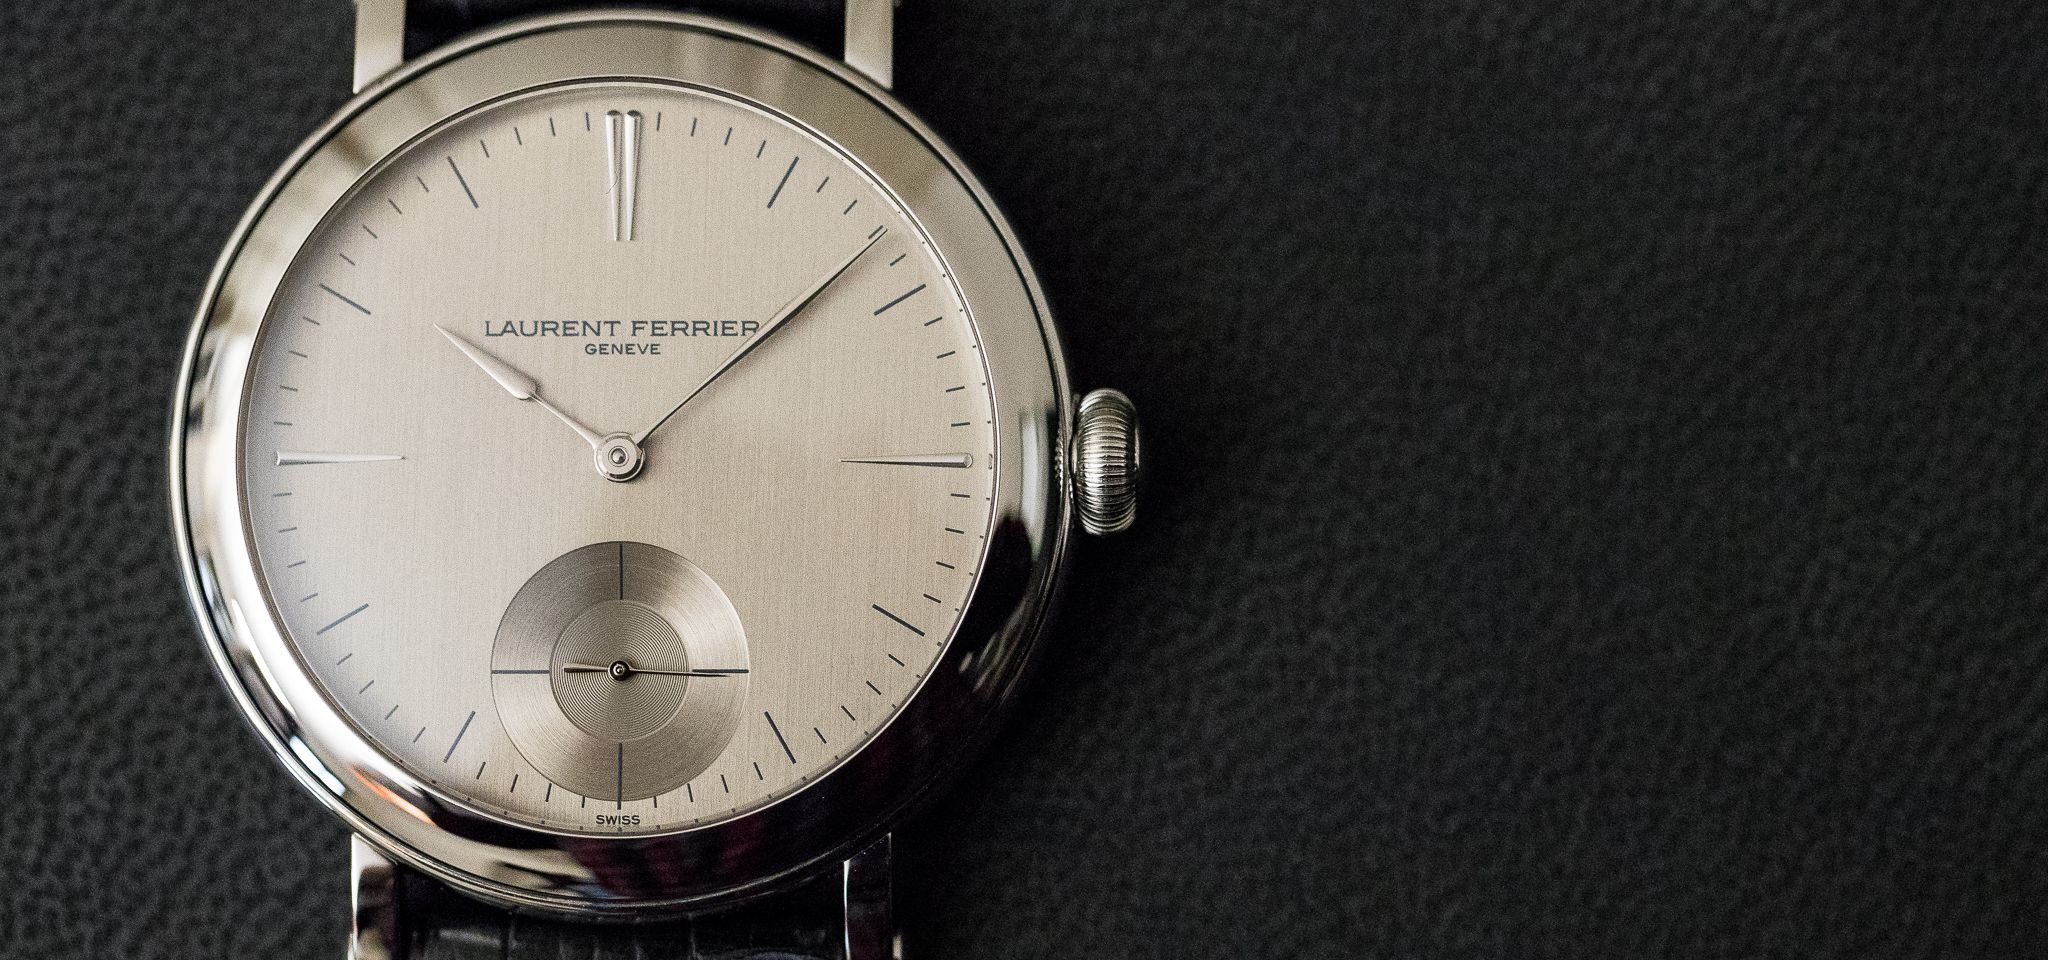 Haute Horlogerie at its best: Visting Laurent Ferrier (Video)